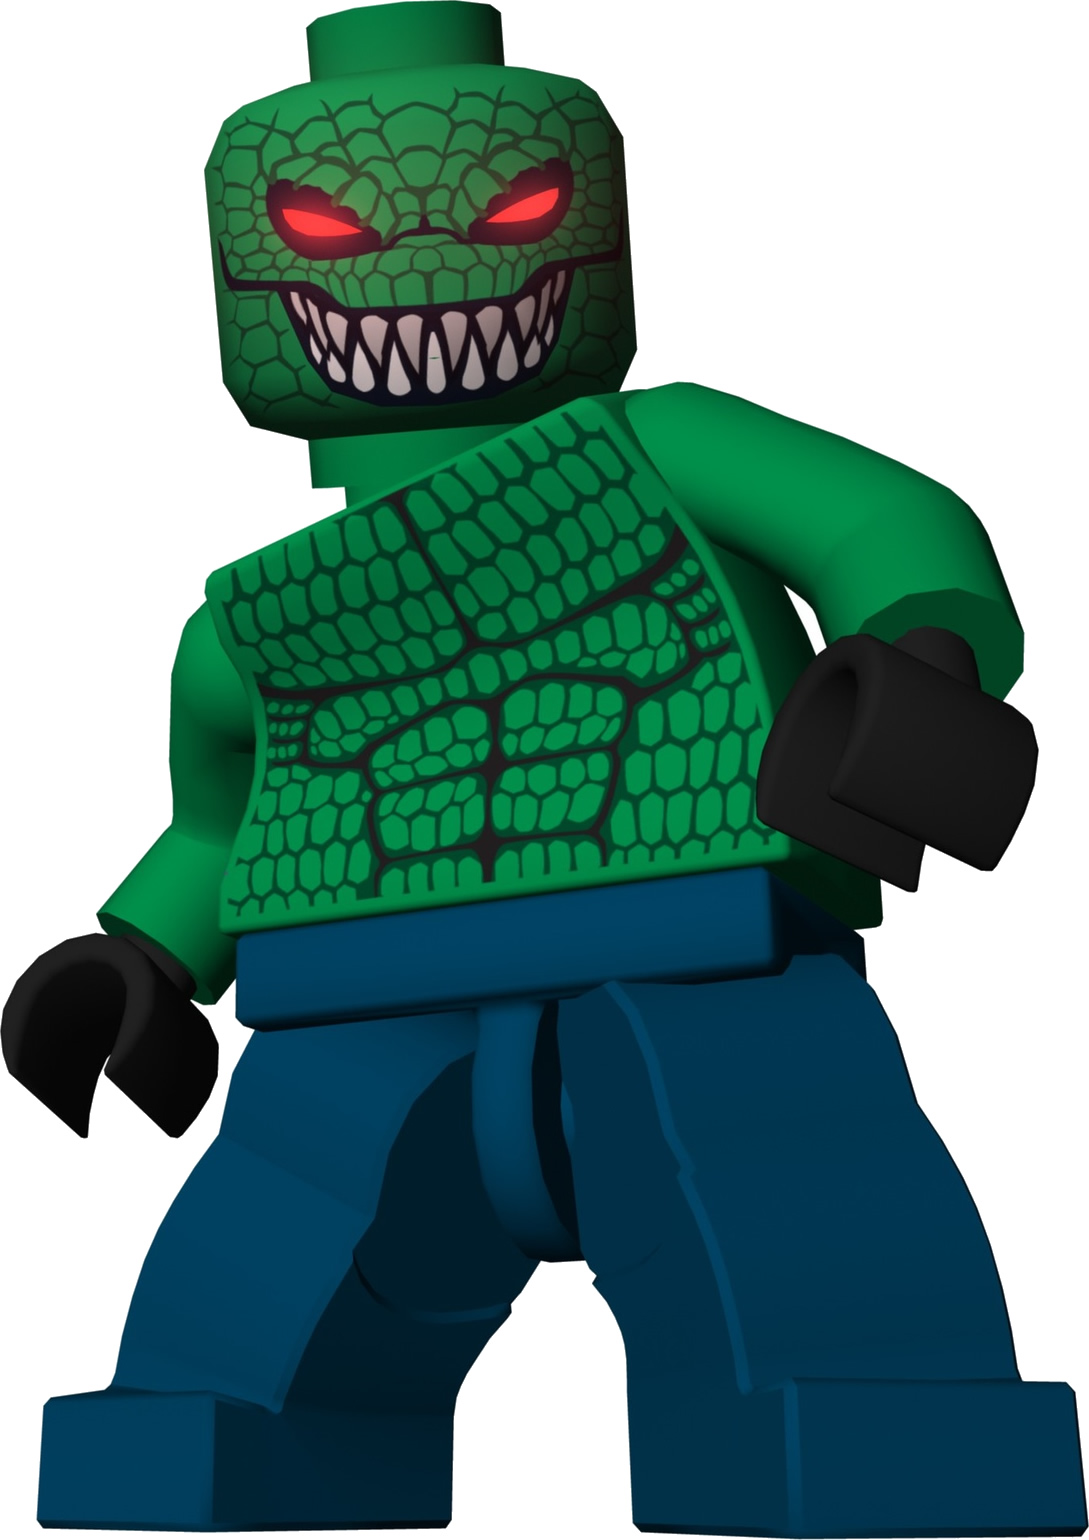 Characters - The Lego Batman Wiki